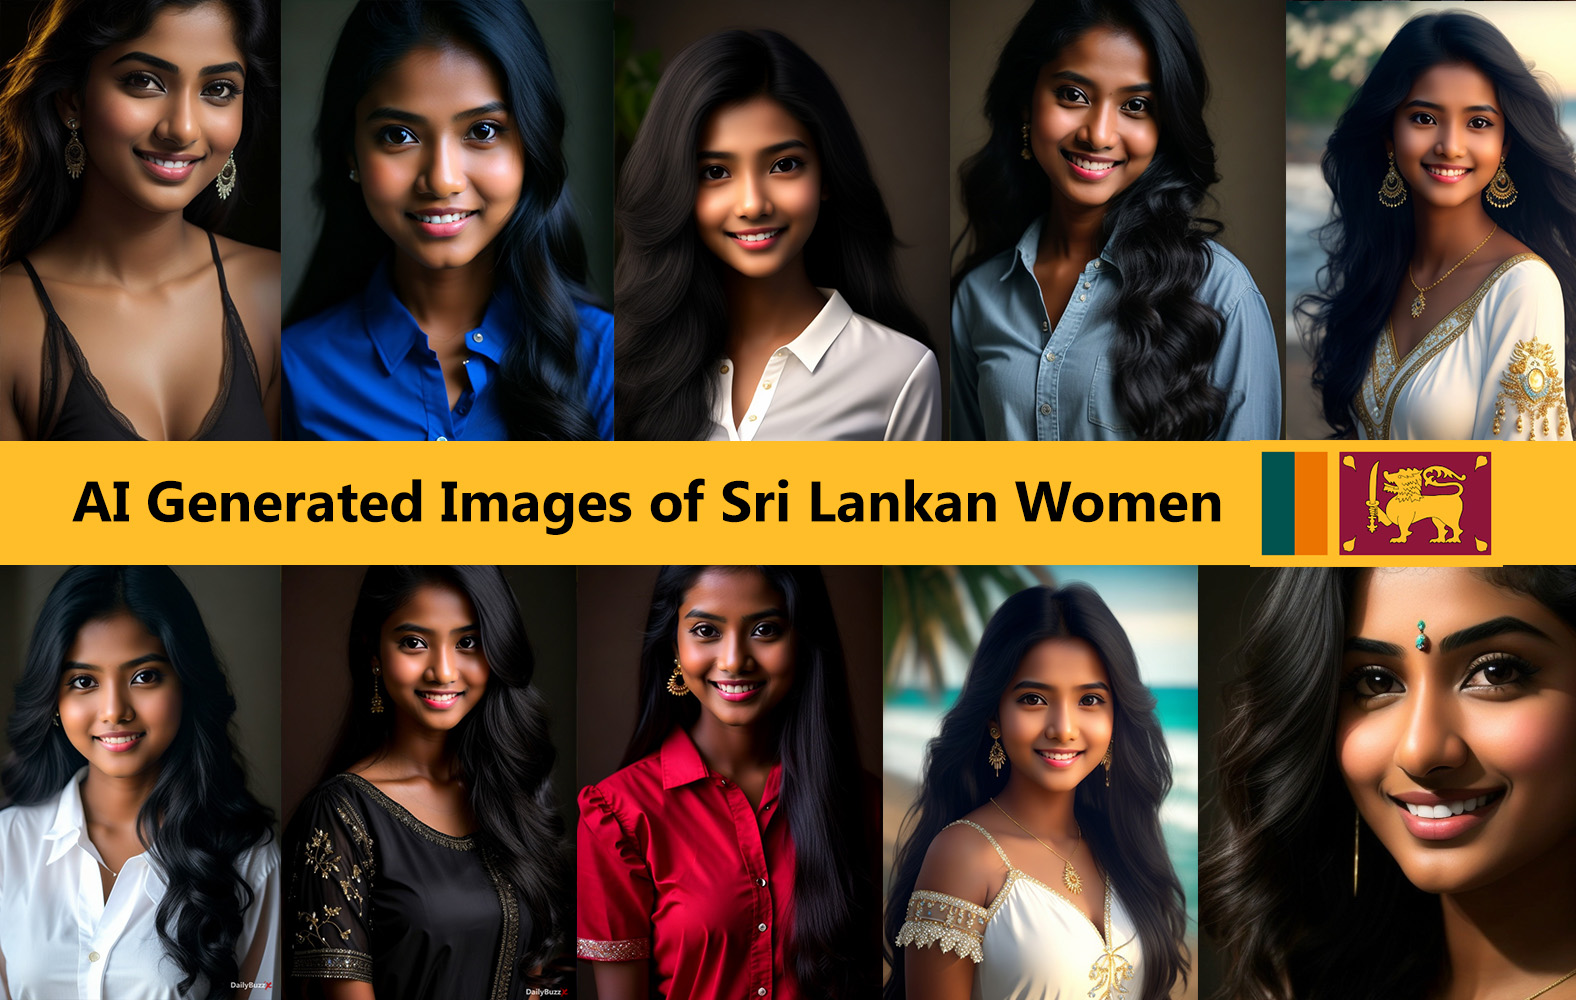 AI-Generated Images Portraying Sri Lankan Women